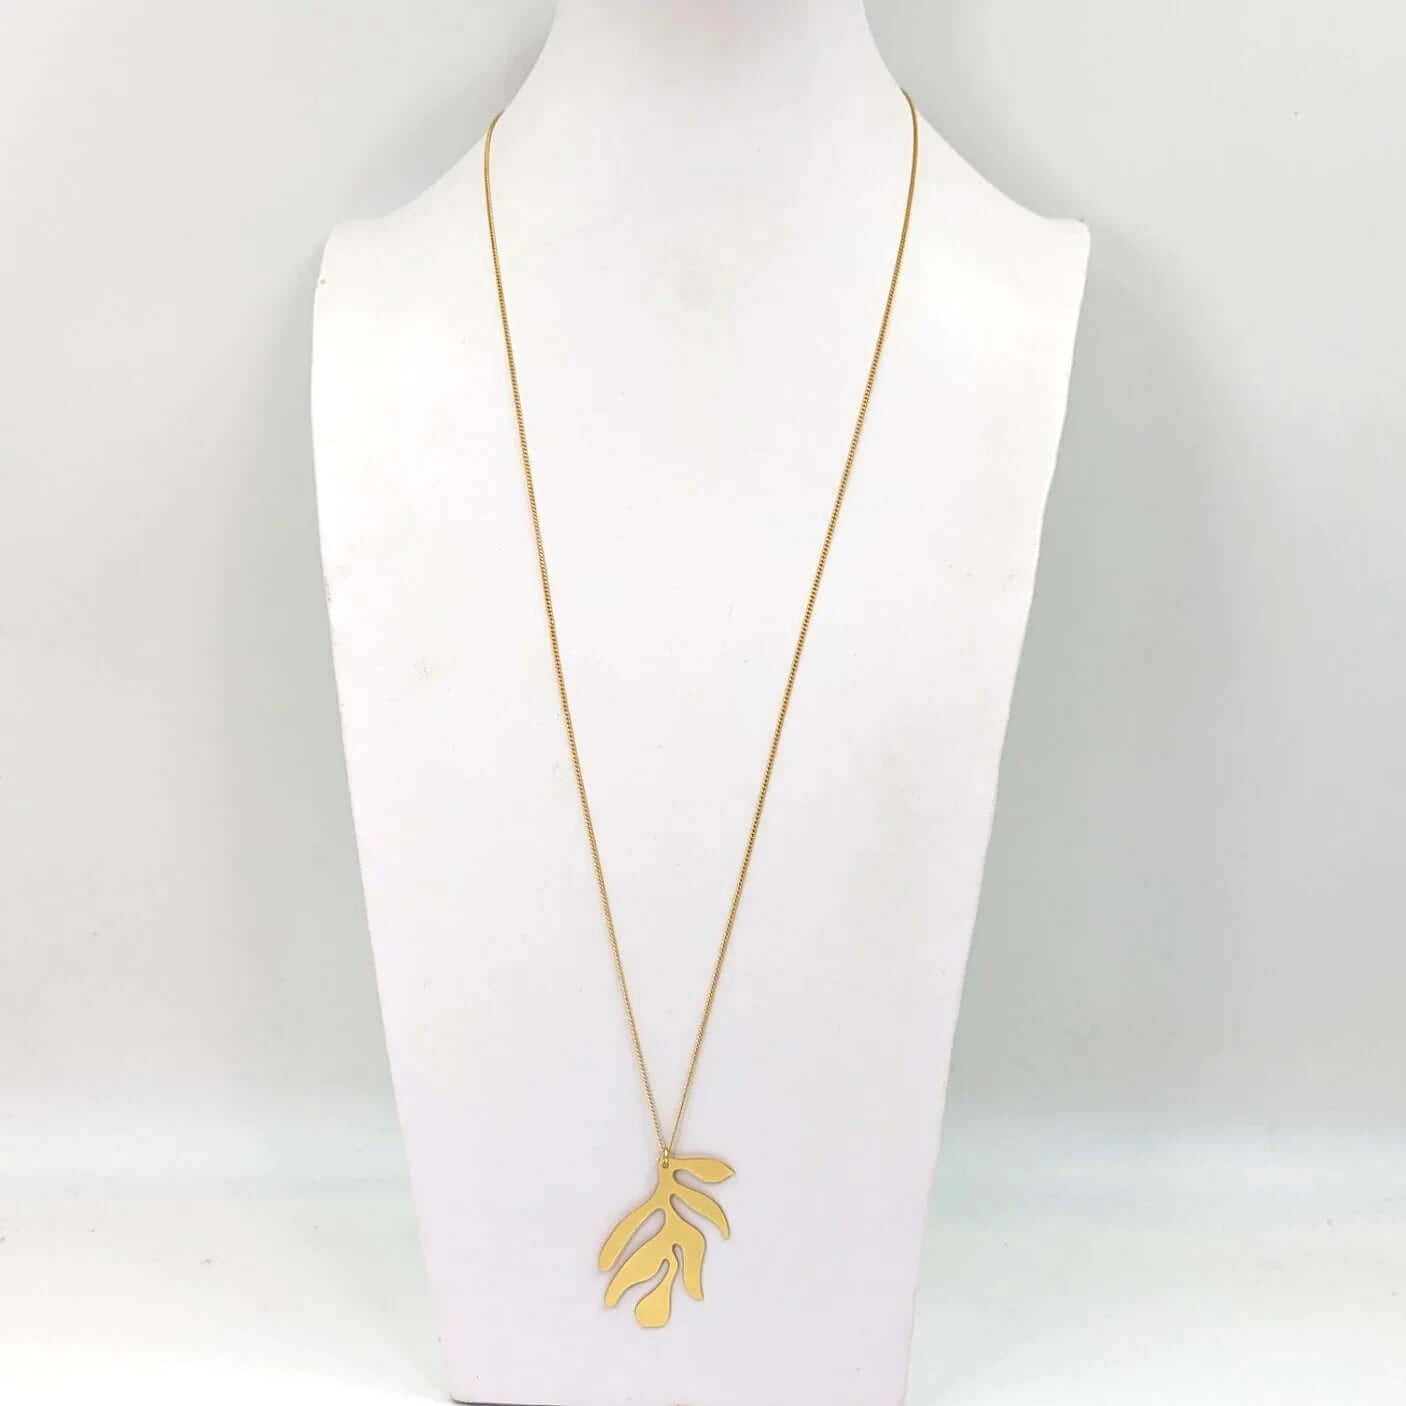 Organic leaf shape long necklace - gold